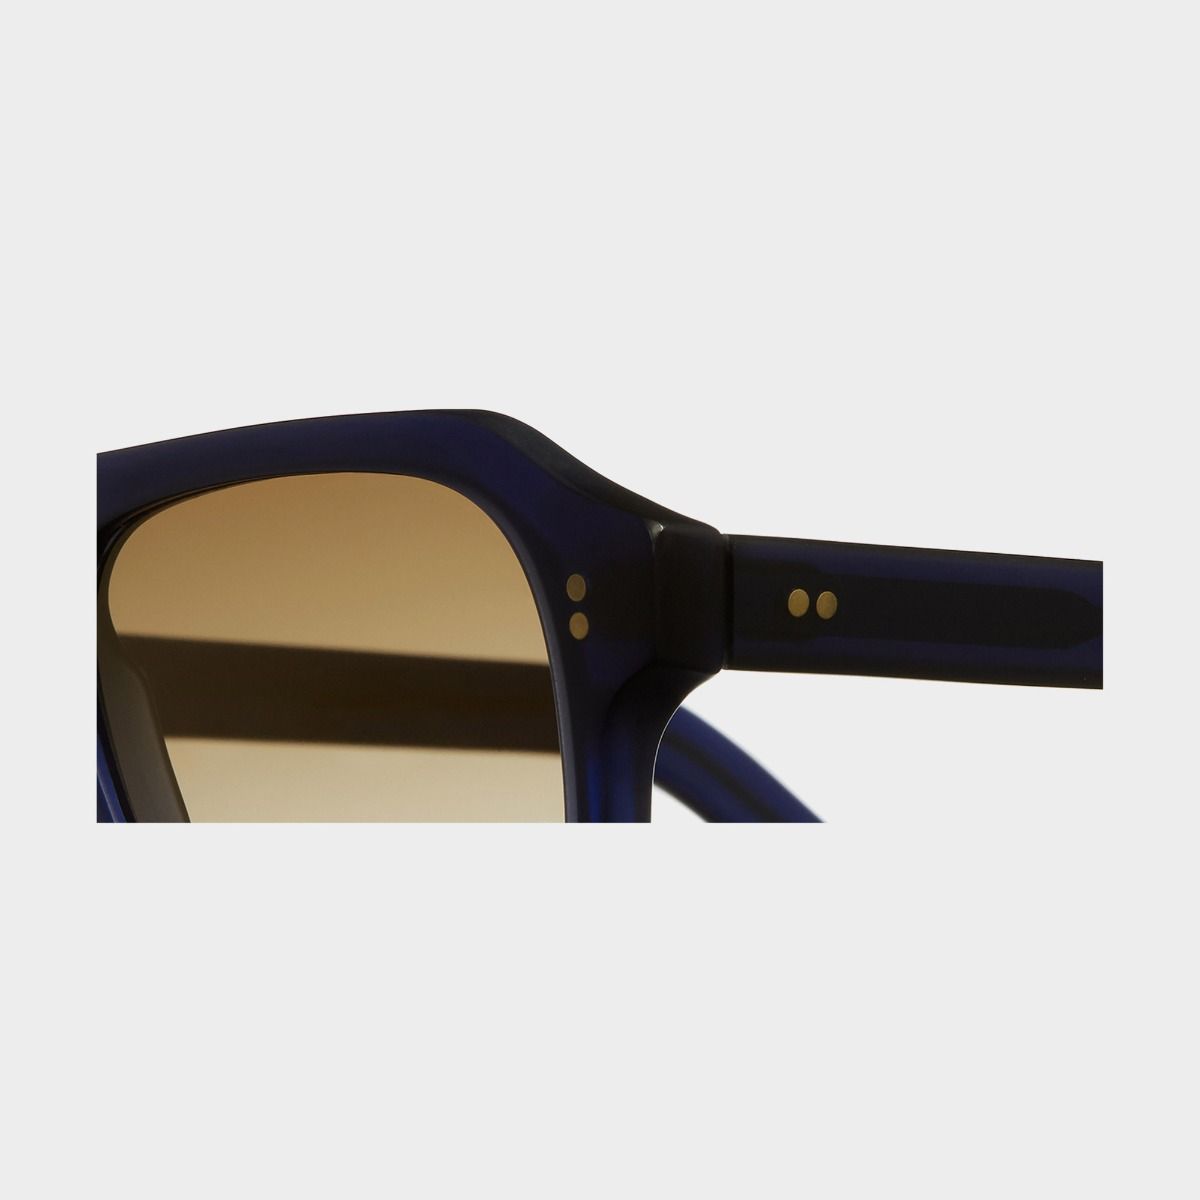 0822V2 Aviator Sunglasses-Matt Classic Navy Blue